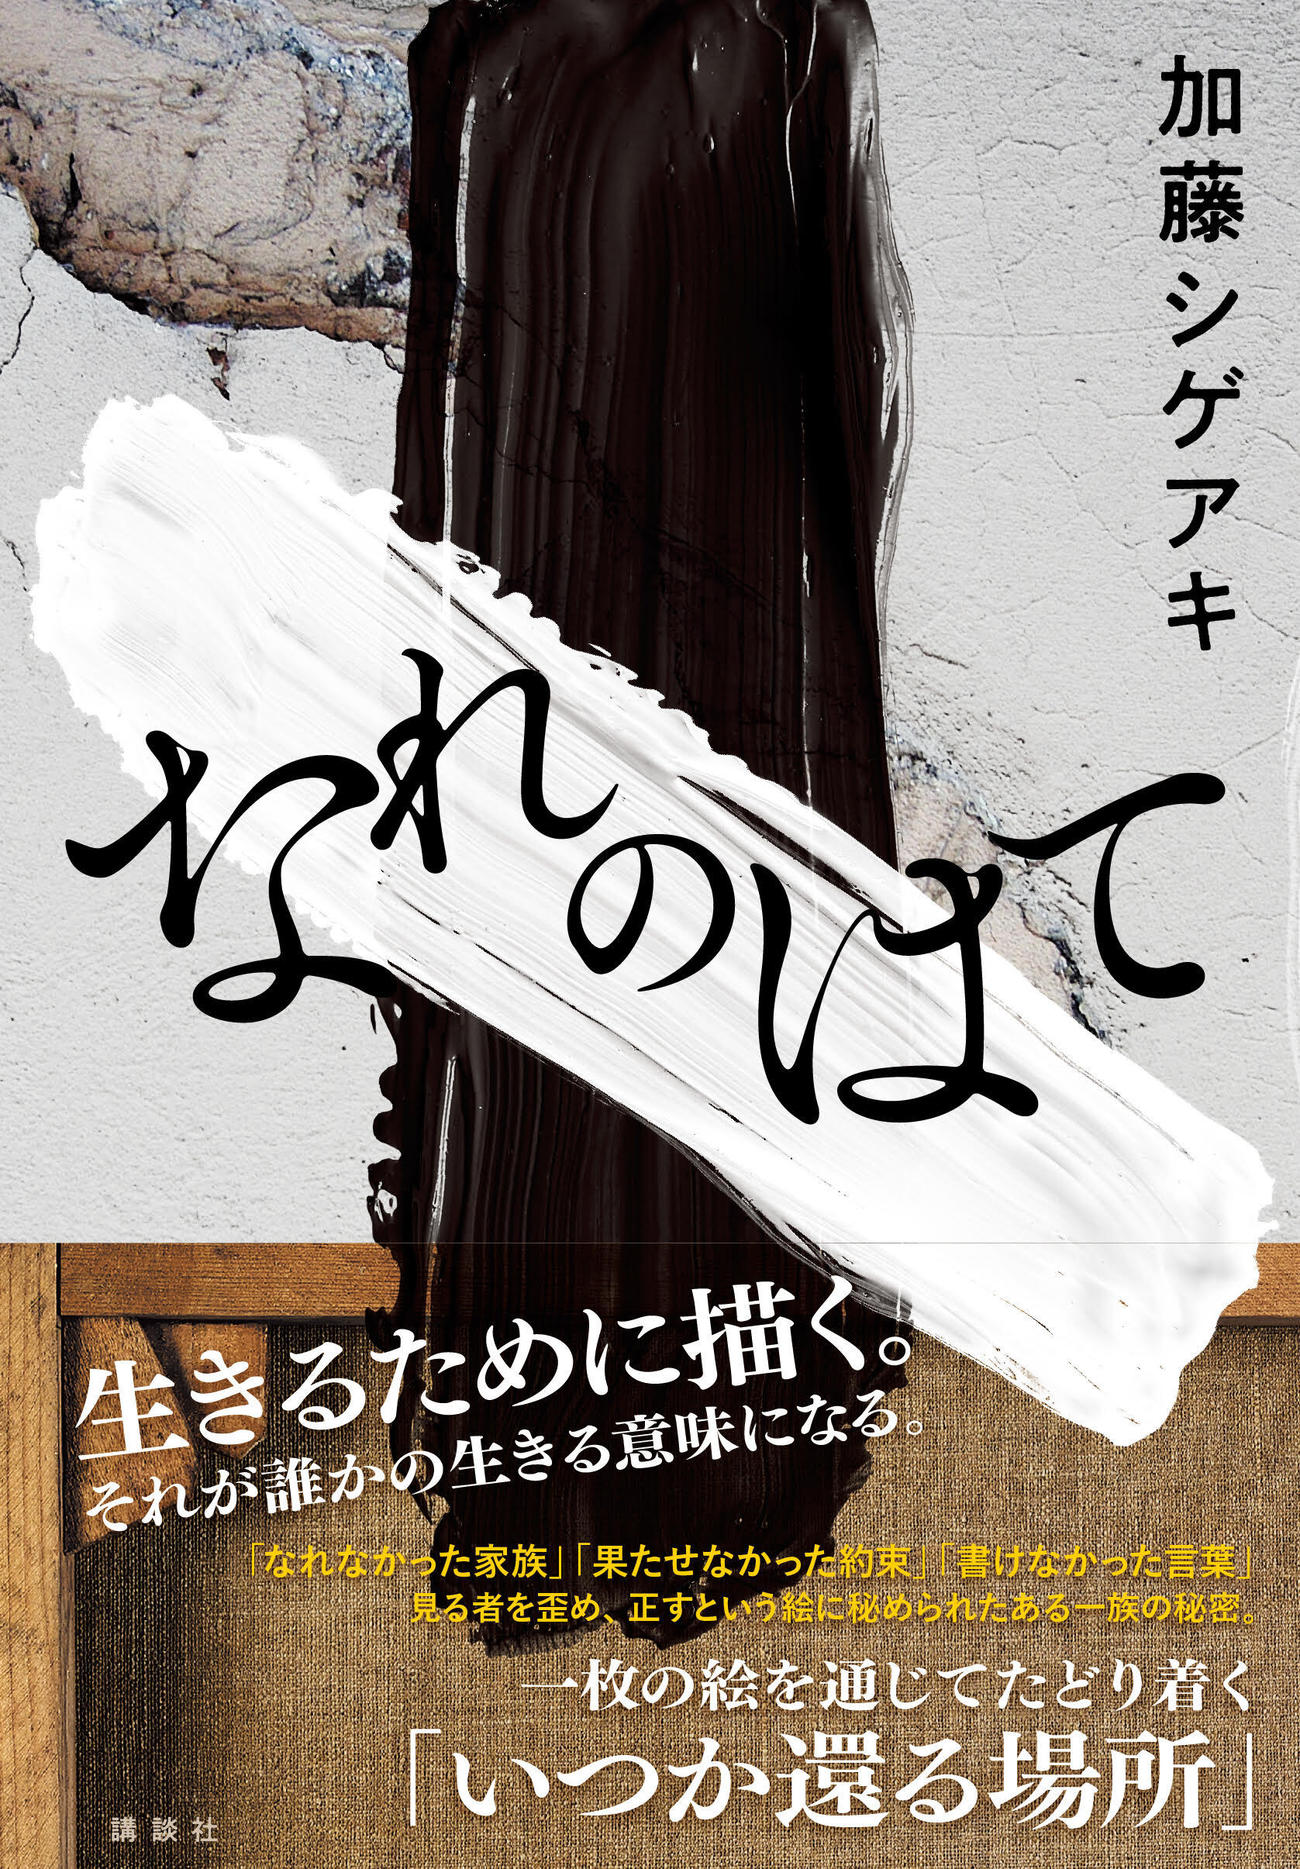 NEWS加藤シゲアキの最新作「なれのはて」のカバーデザイン